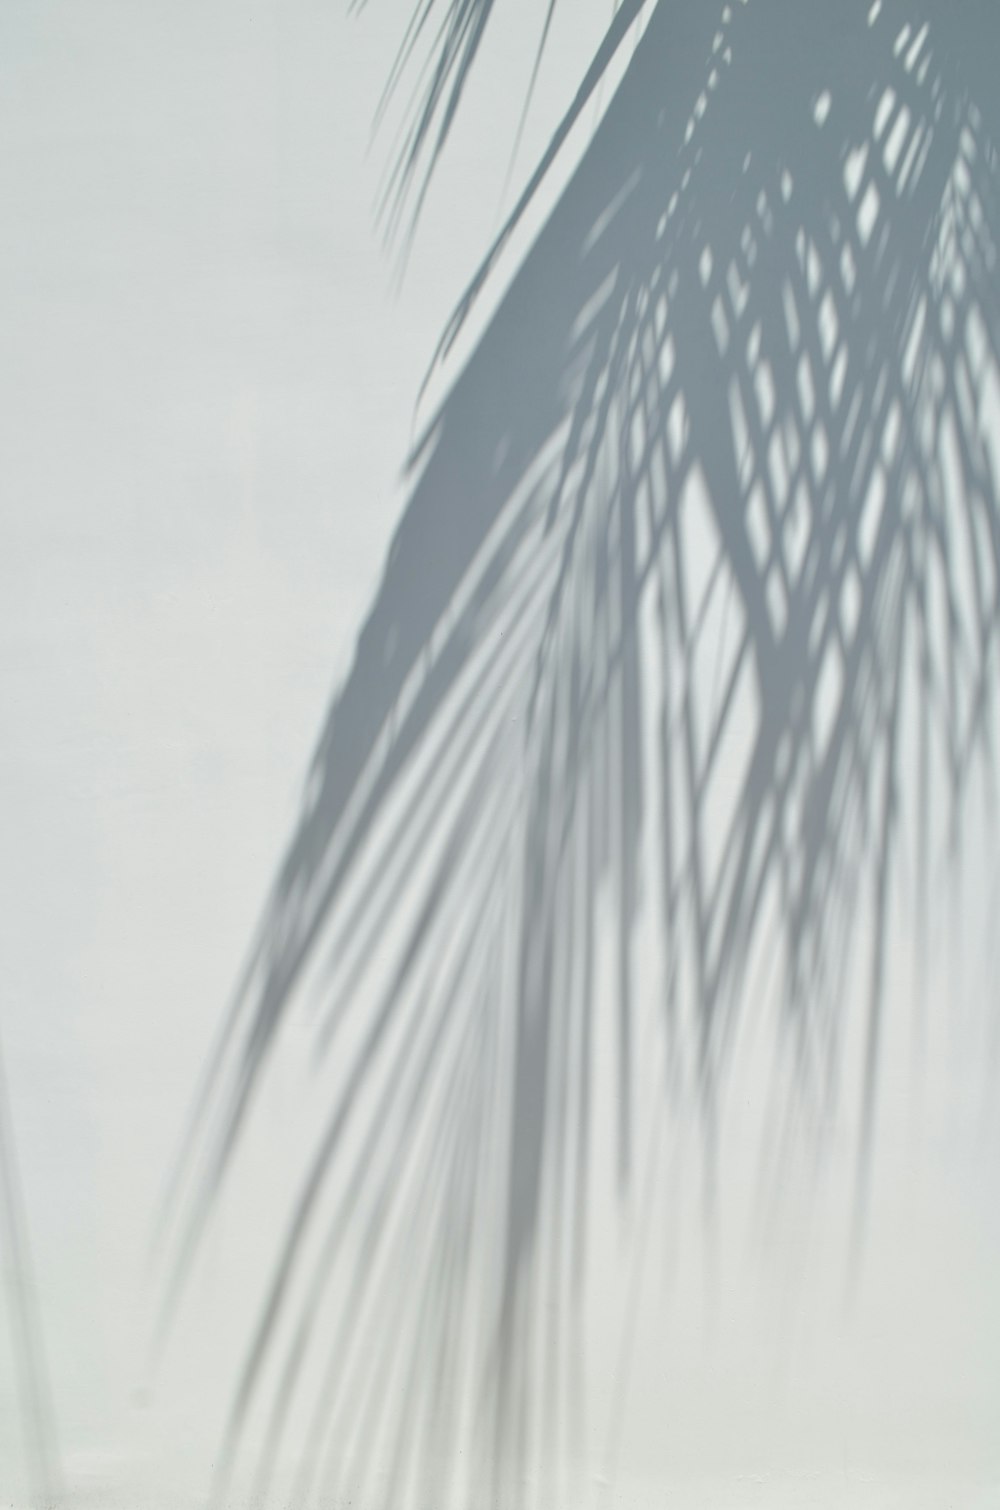 a palm tree casts a shadow on a white wall